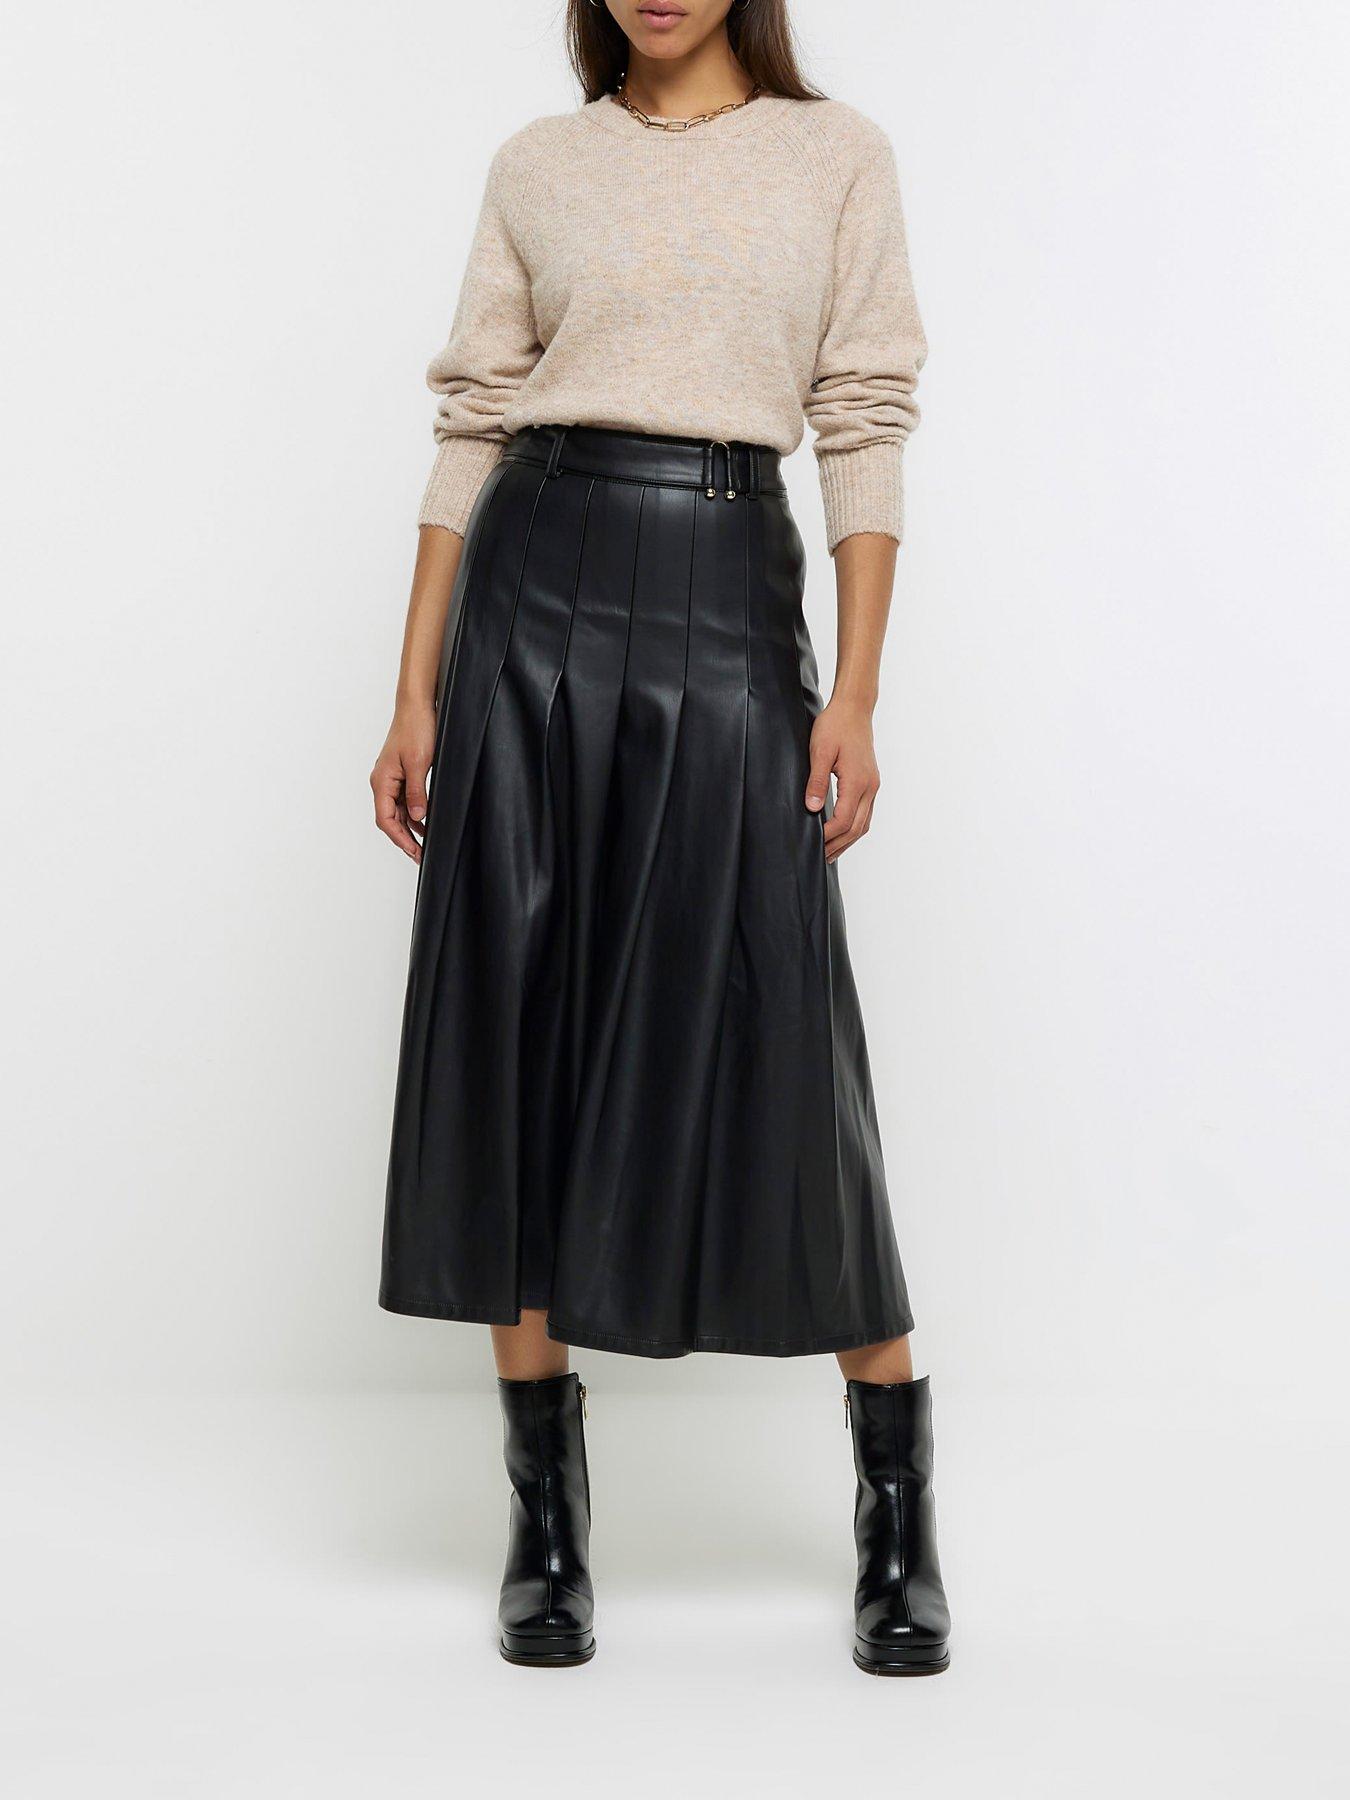 Pour Moi Elise Faux Leather Midi Pencil Skirt